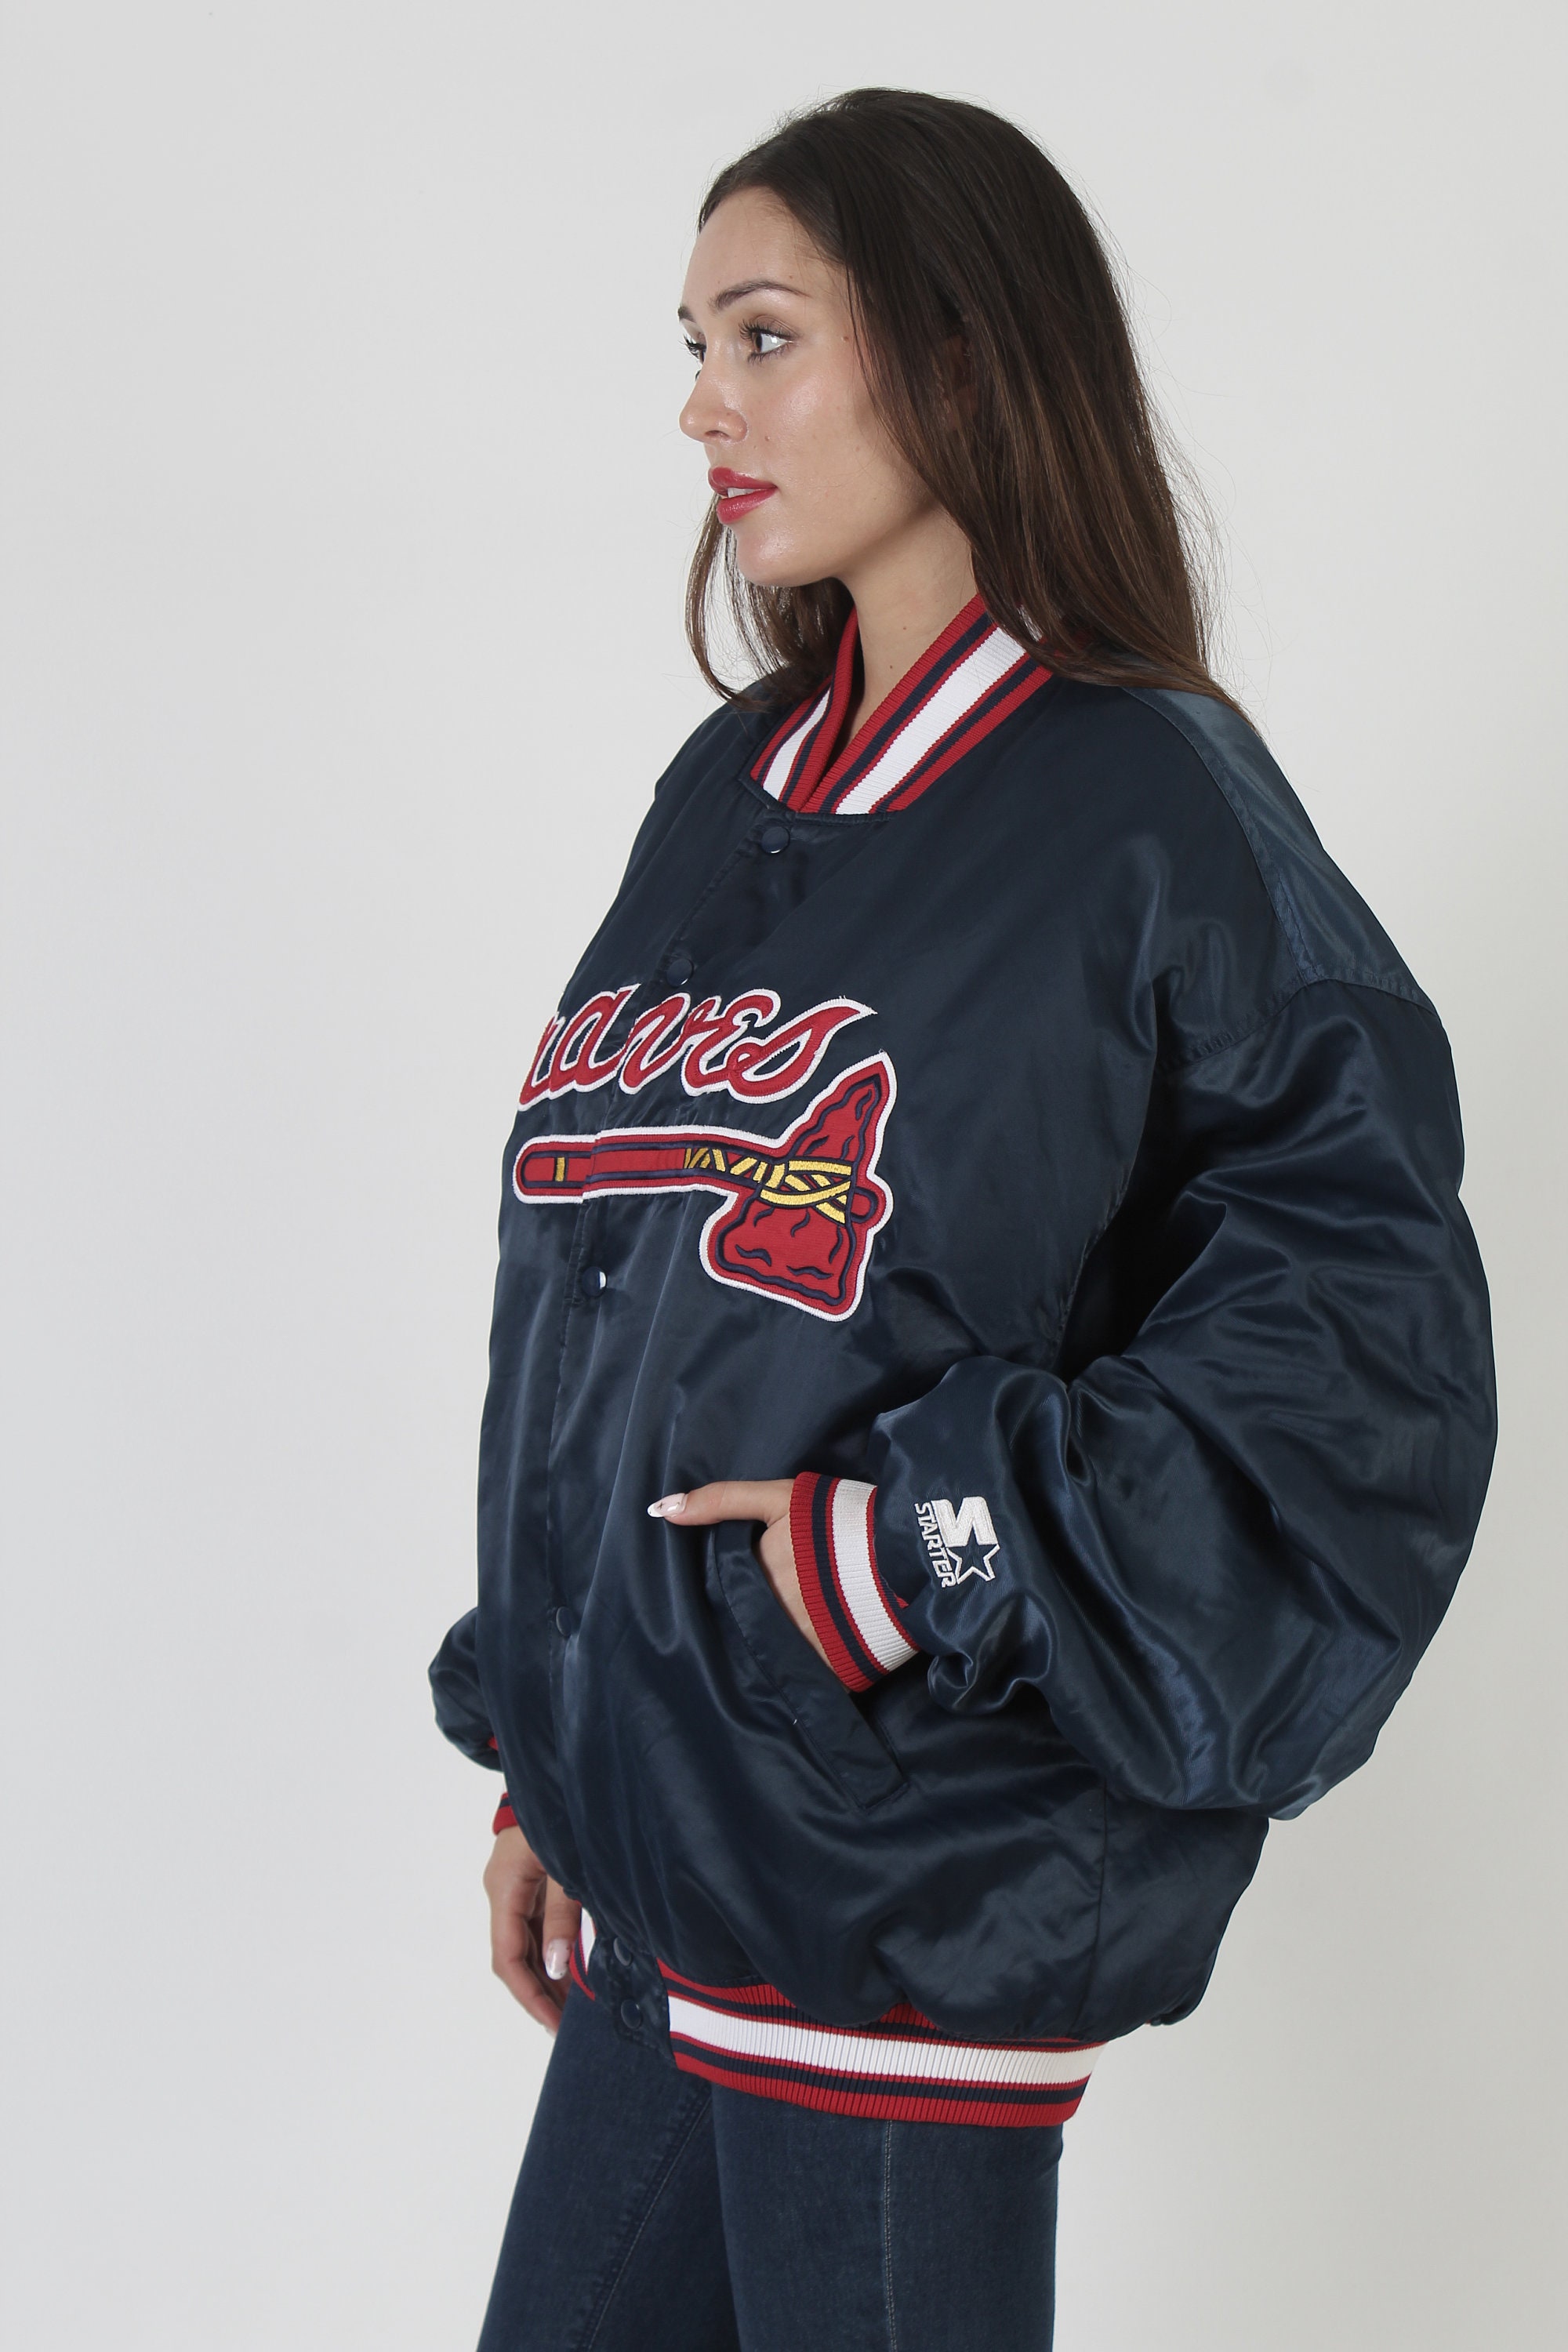 VTG 80s 90s Starter Atlanta Braves Made In USA Satin Varsity Jacket Mens  Large